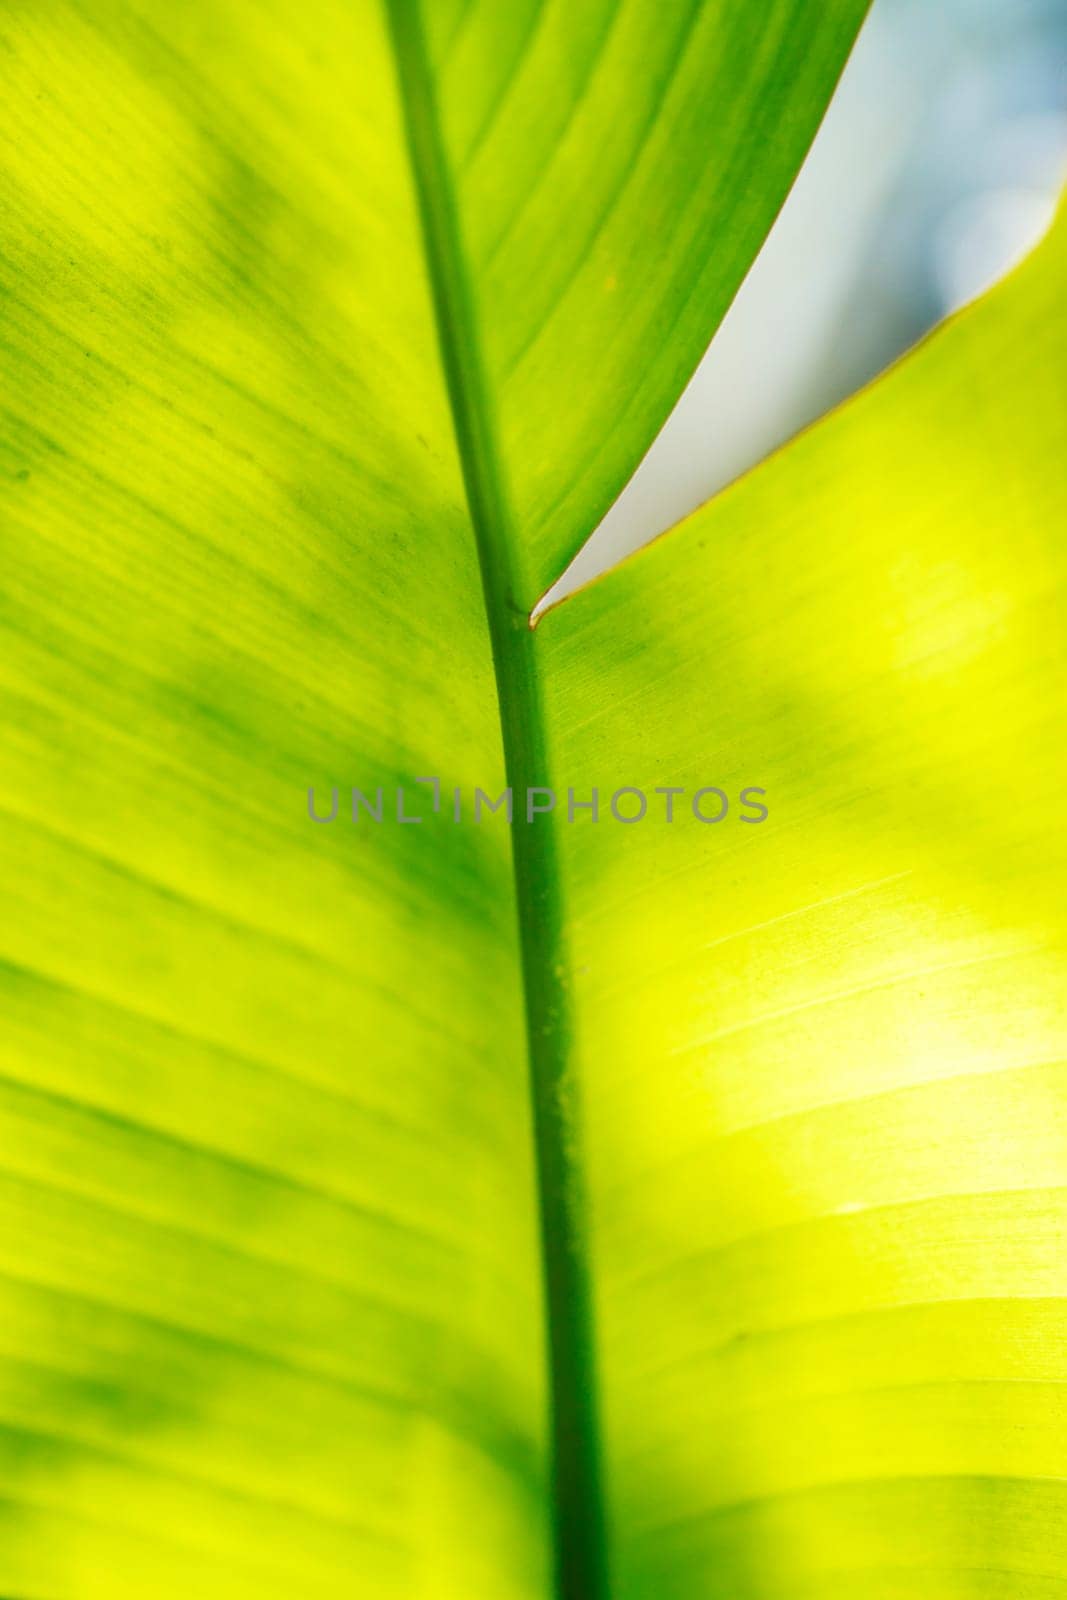 Banana palm tree leaf close-up by Yellowj